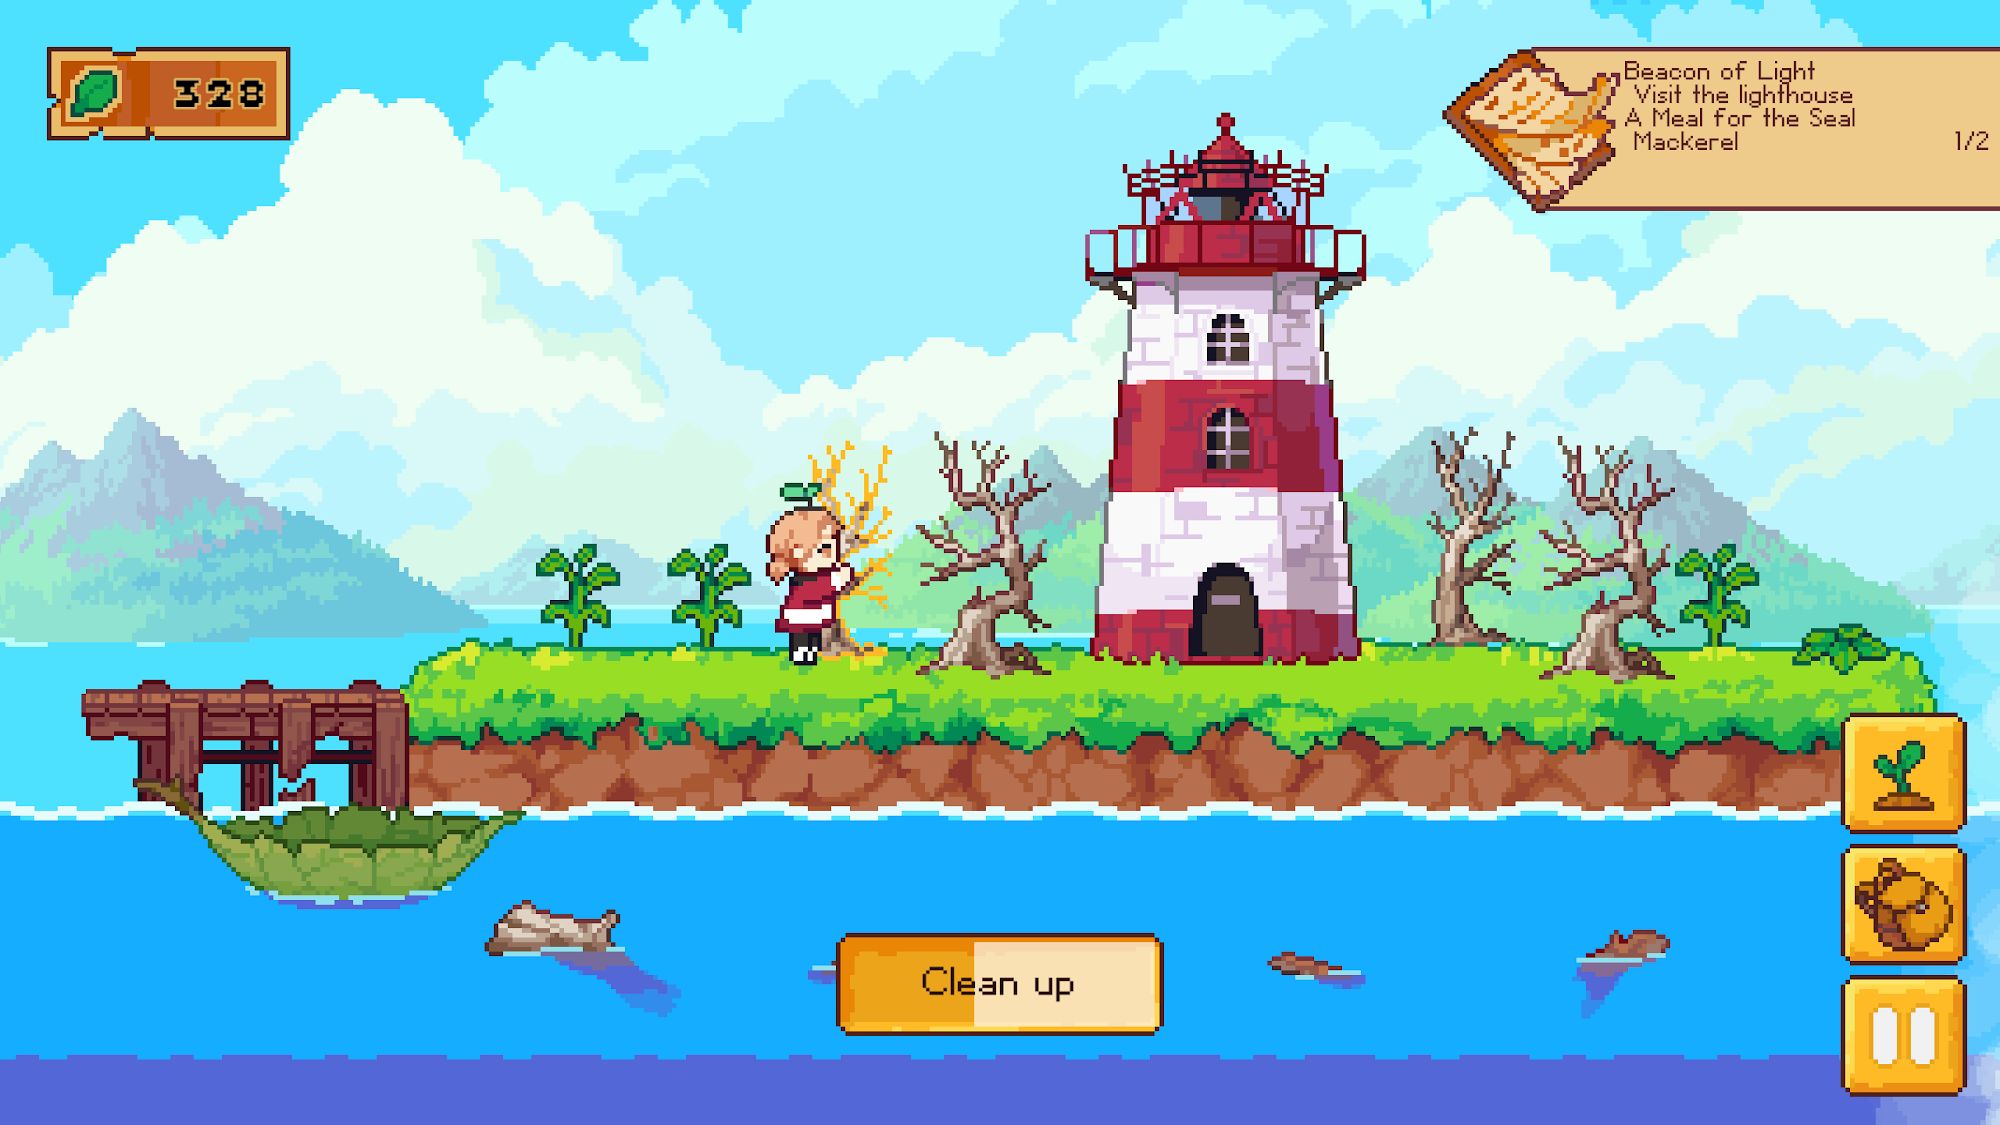 Scarica Luna's Fishing Garden gratis per Android.